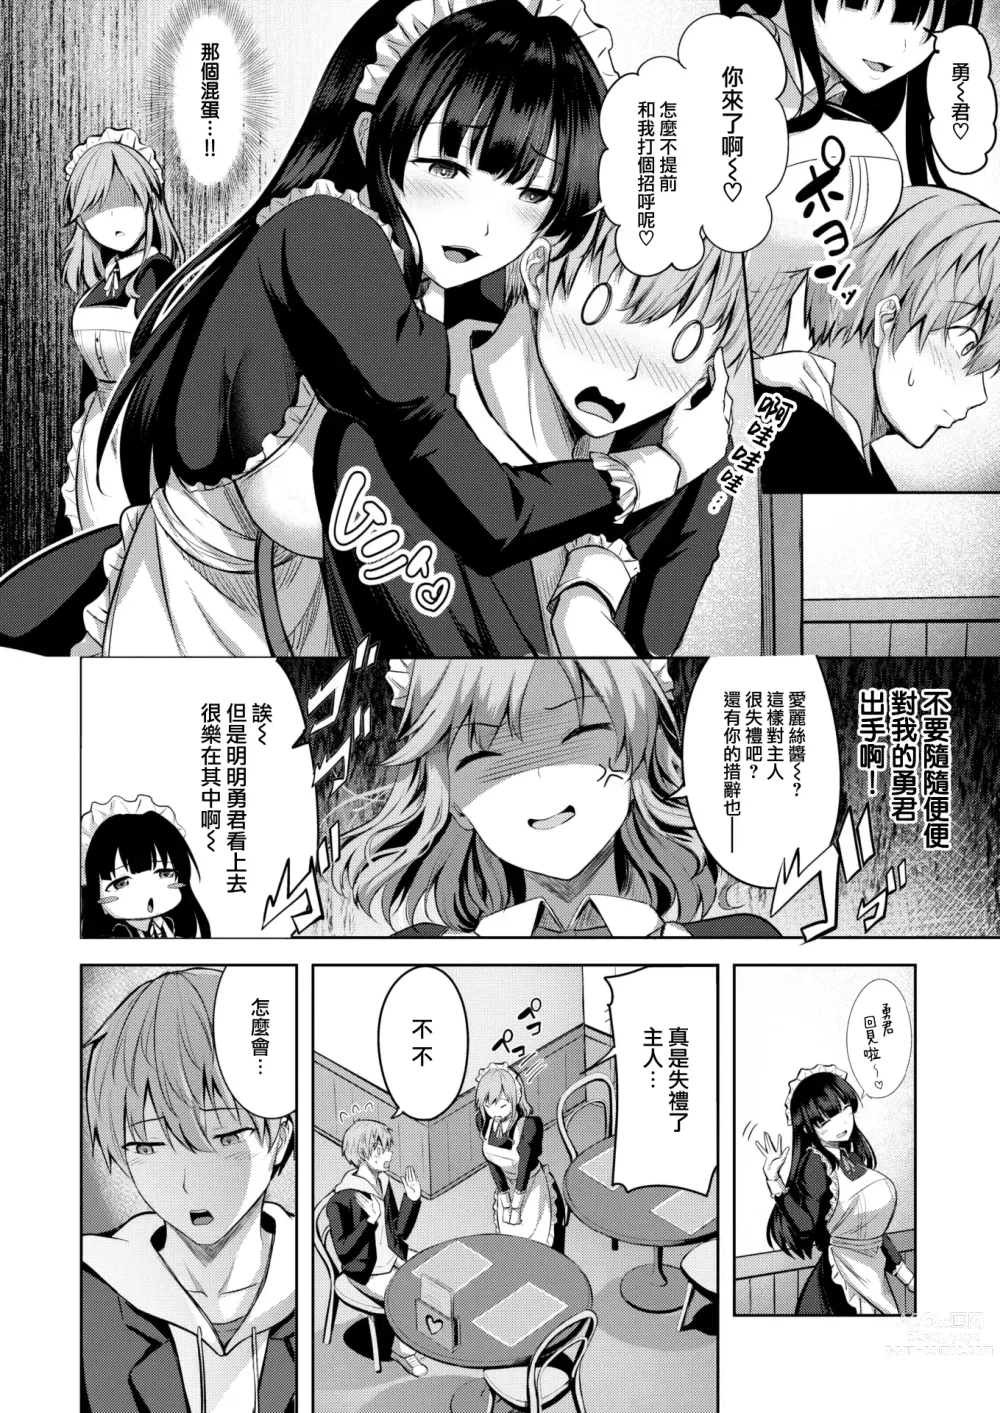 Page 5 of manga Maid@Main